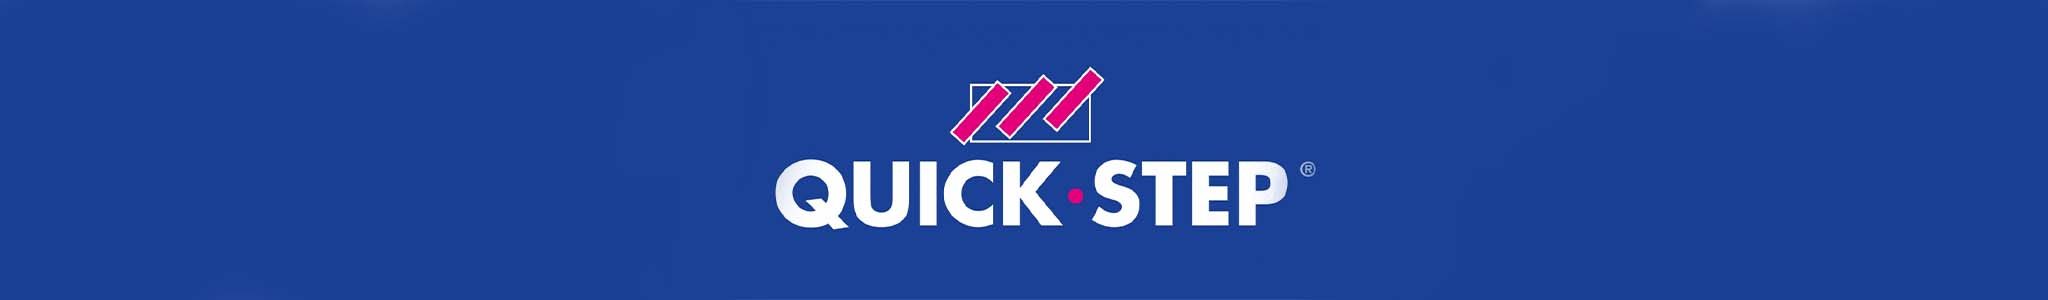 quickstep-logo-2048x300